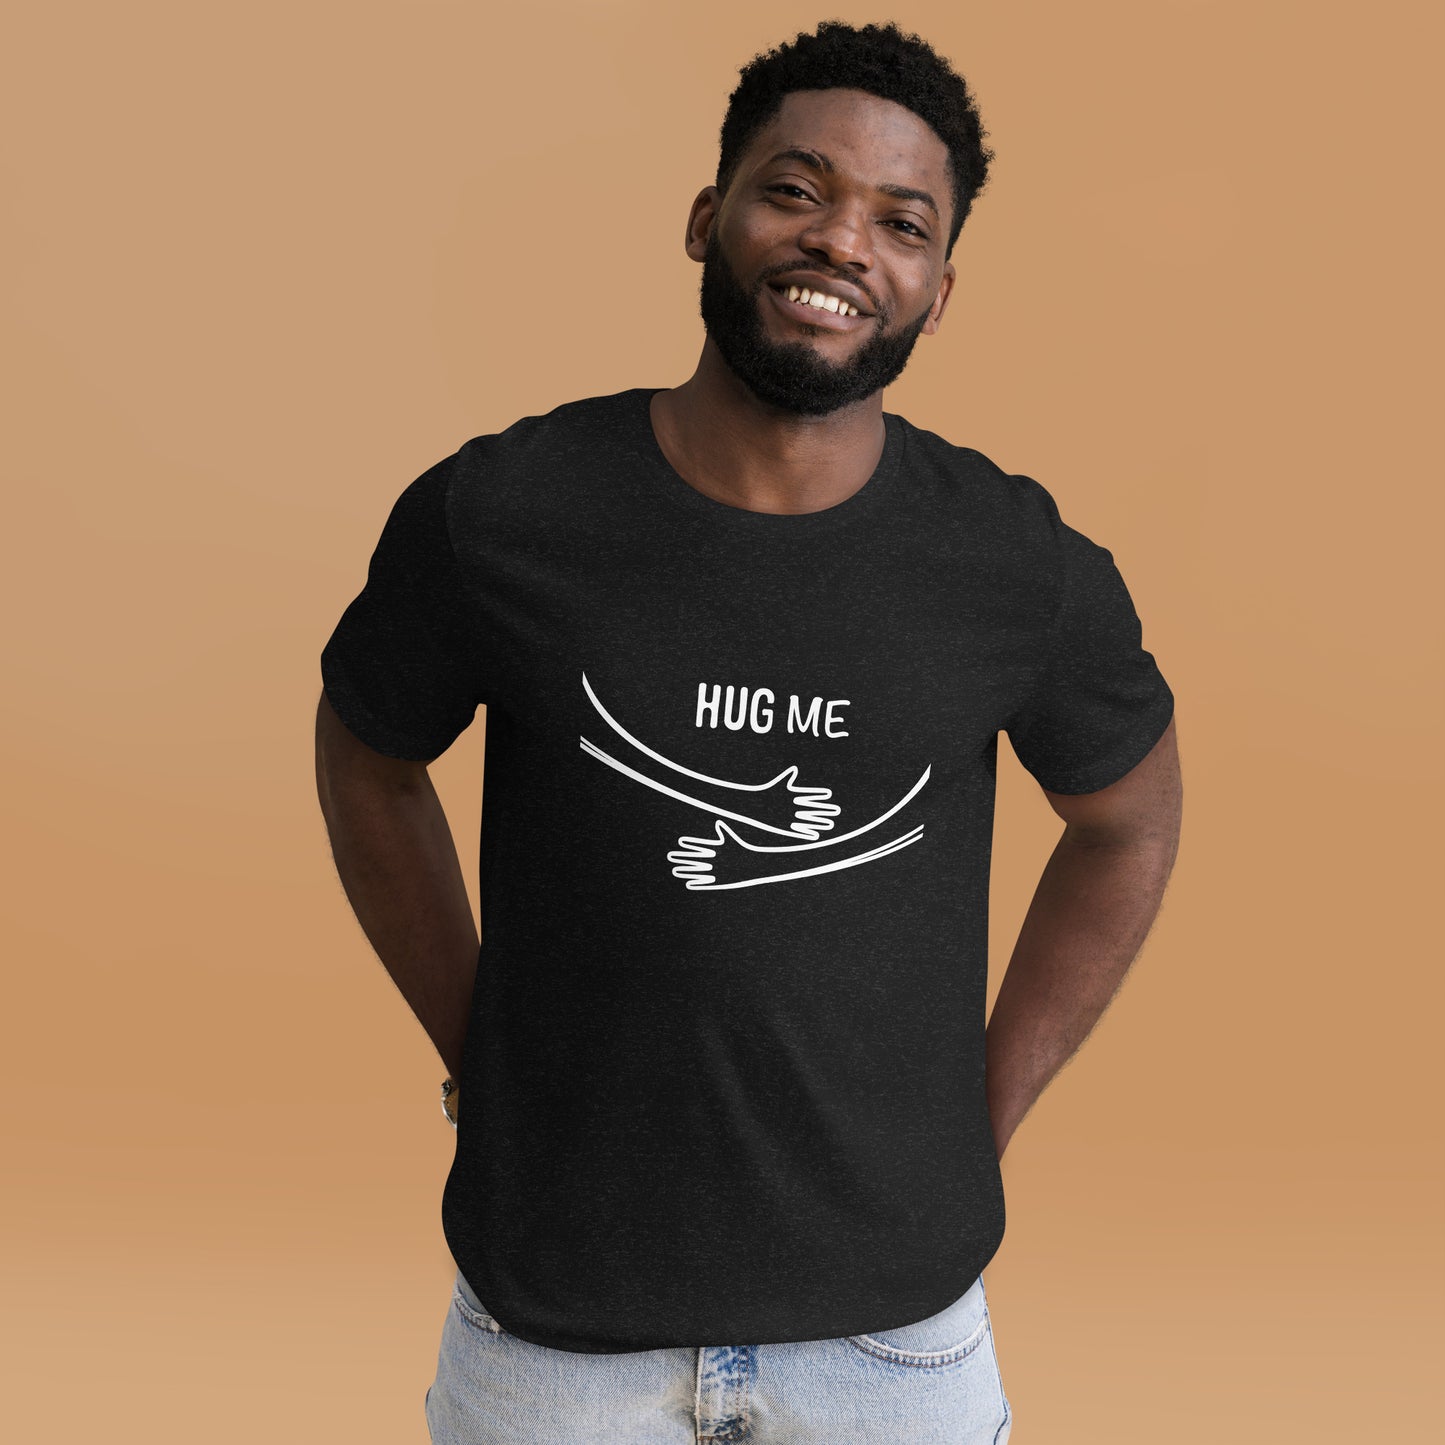 Hug me - Unisex t-shirt